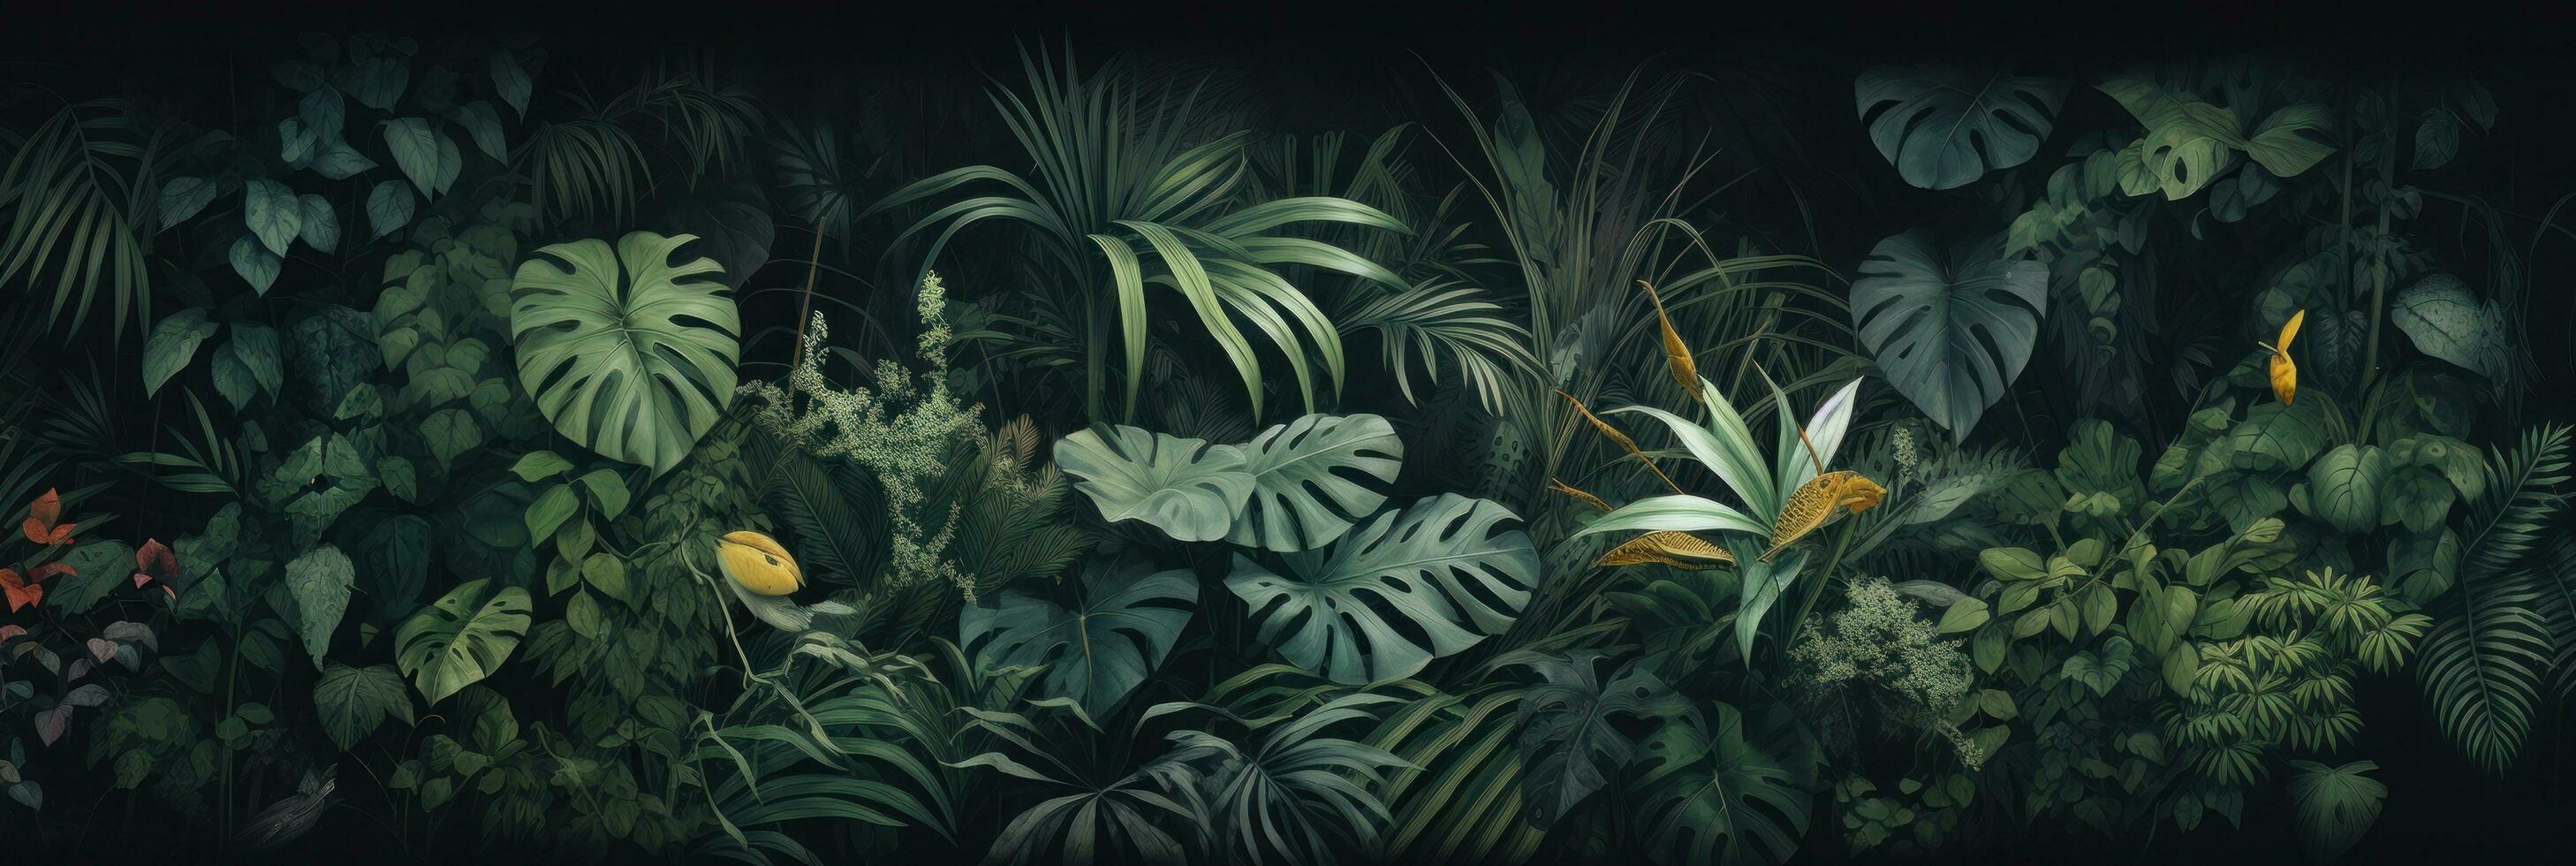 gröna tropiska blad bakgrund foto